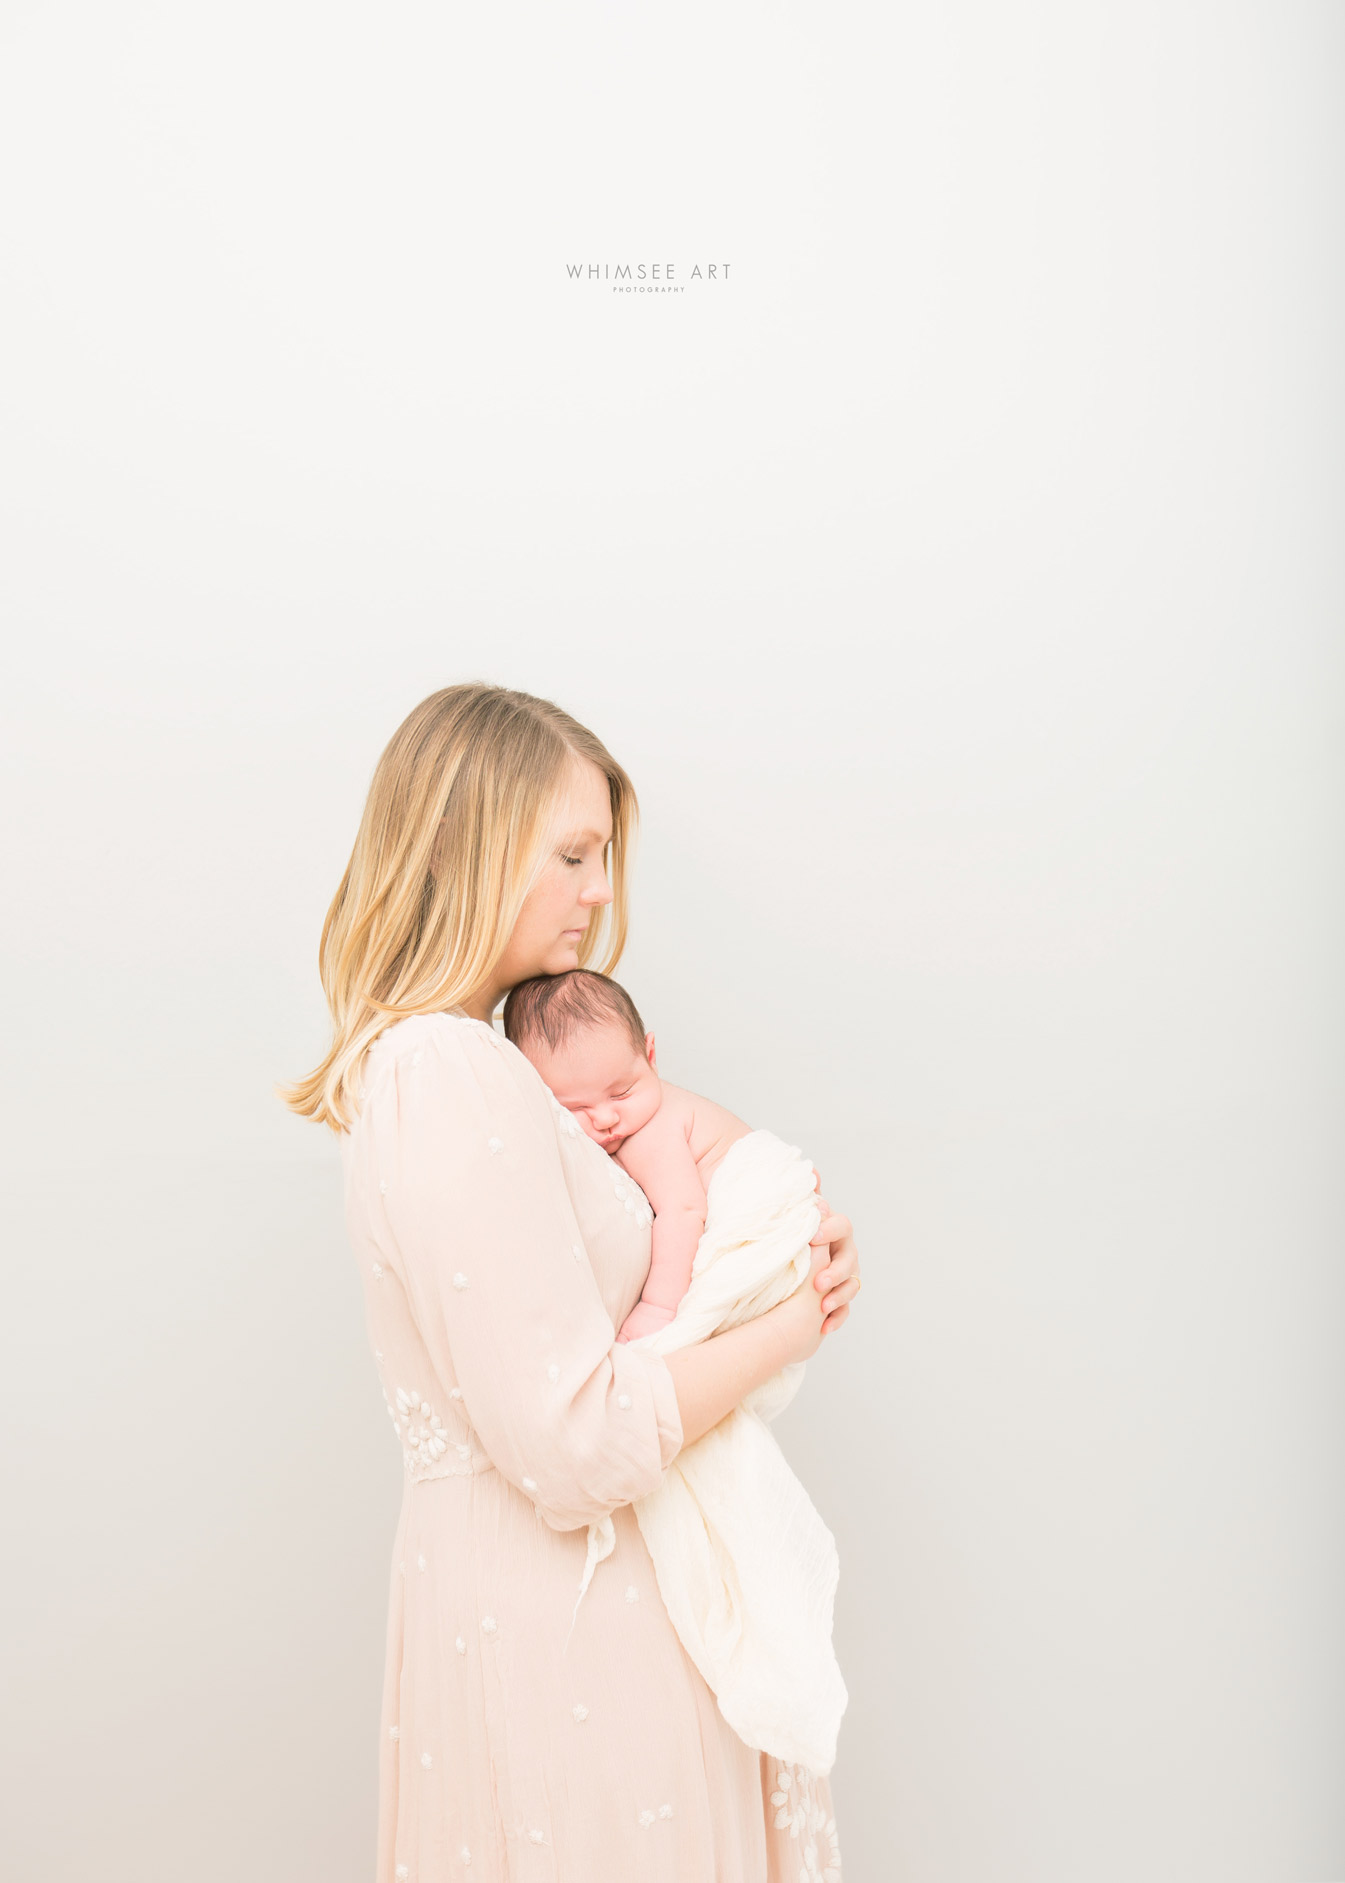 Sweet Baby Elliott | Newborn Photographer | Whimsee Art Photography